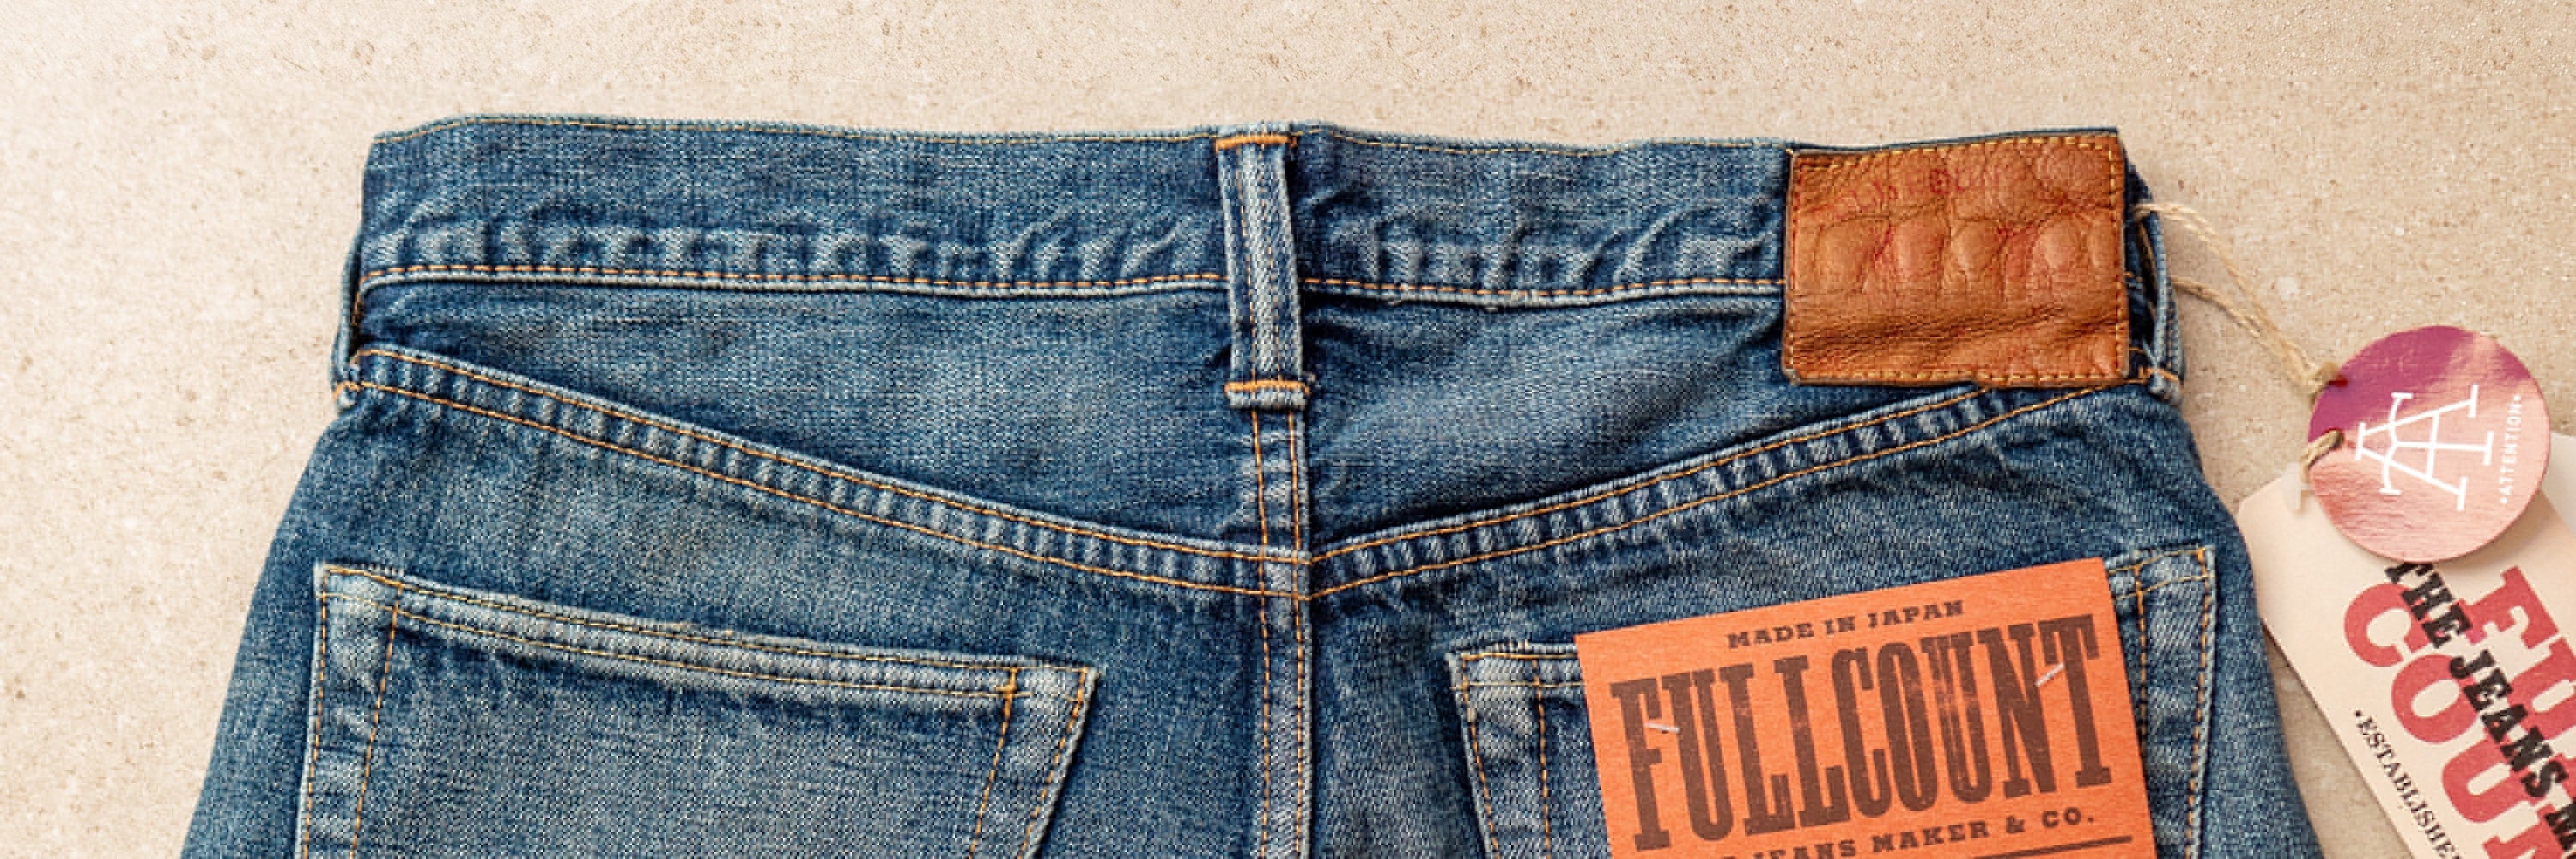 full count Japanese selvedge jeans